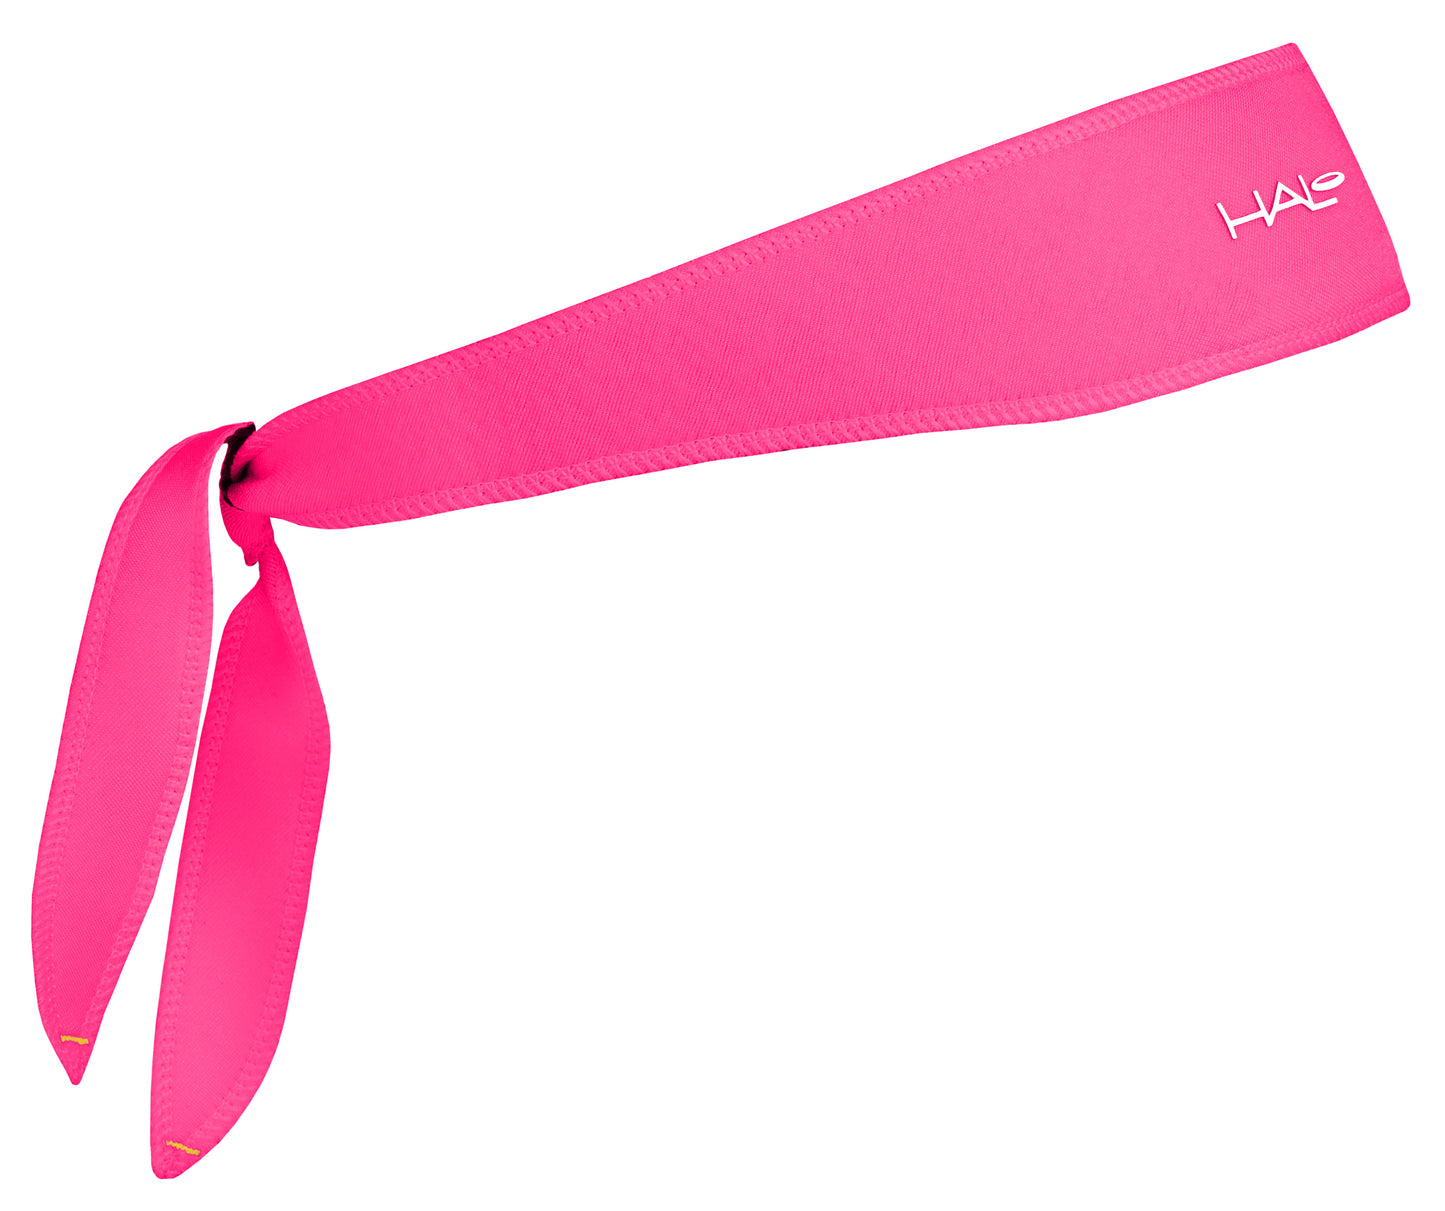 Halo headband, tie version 1 inch in bright pink